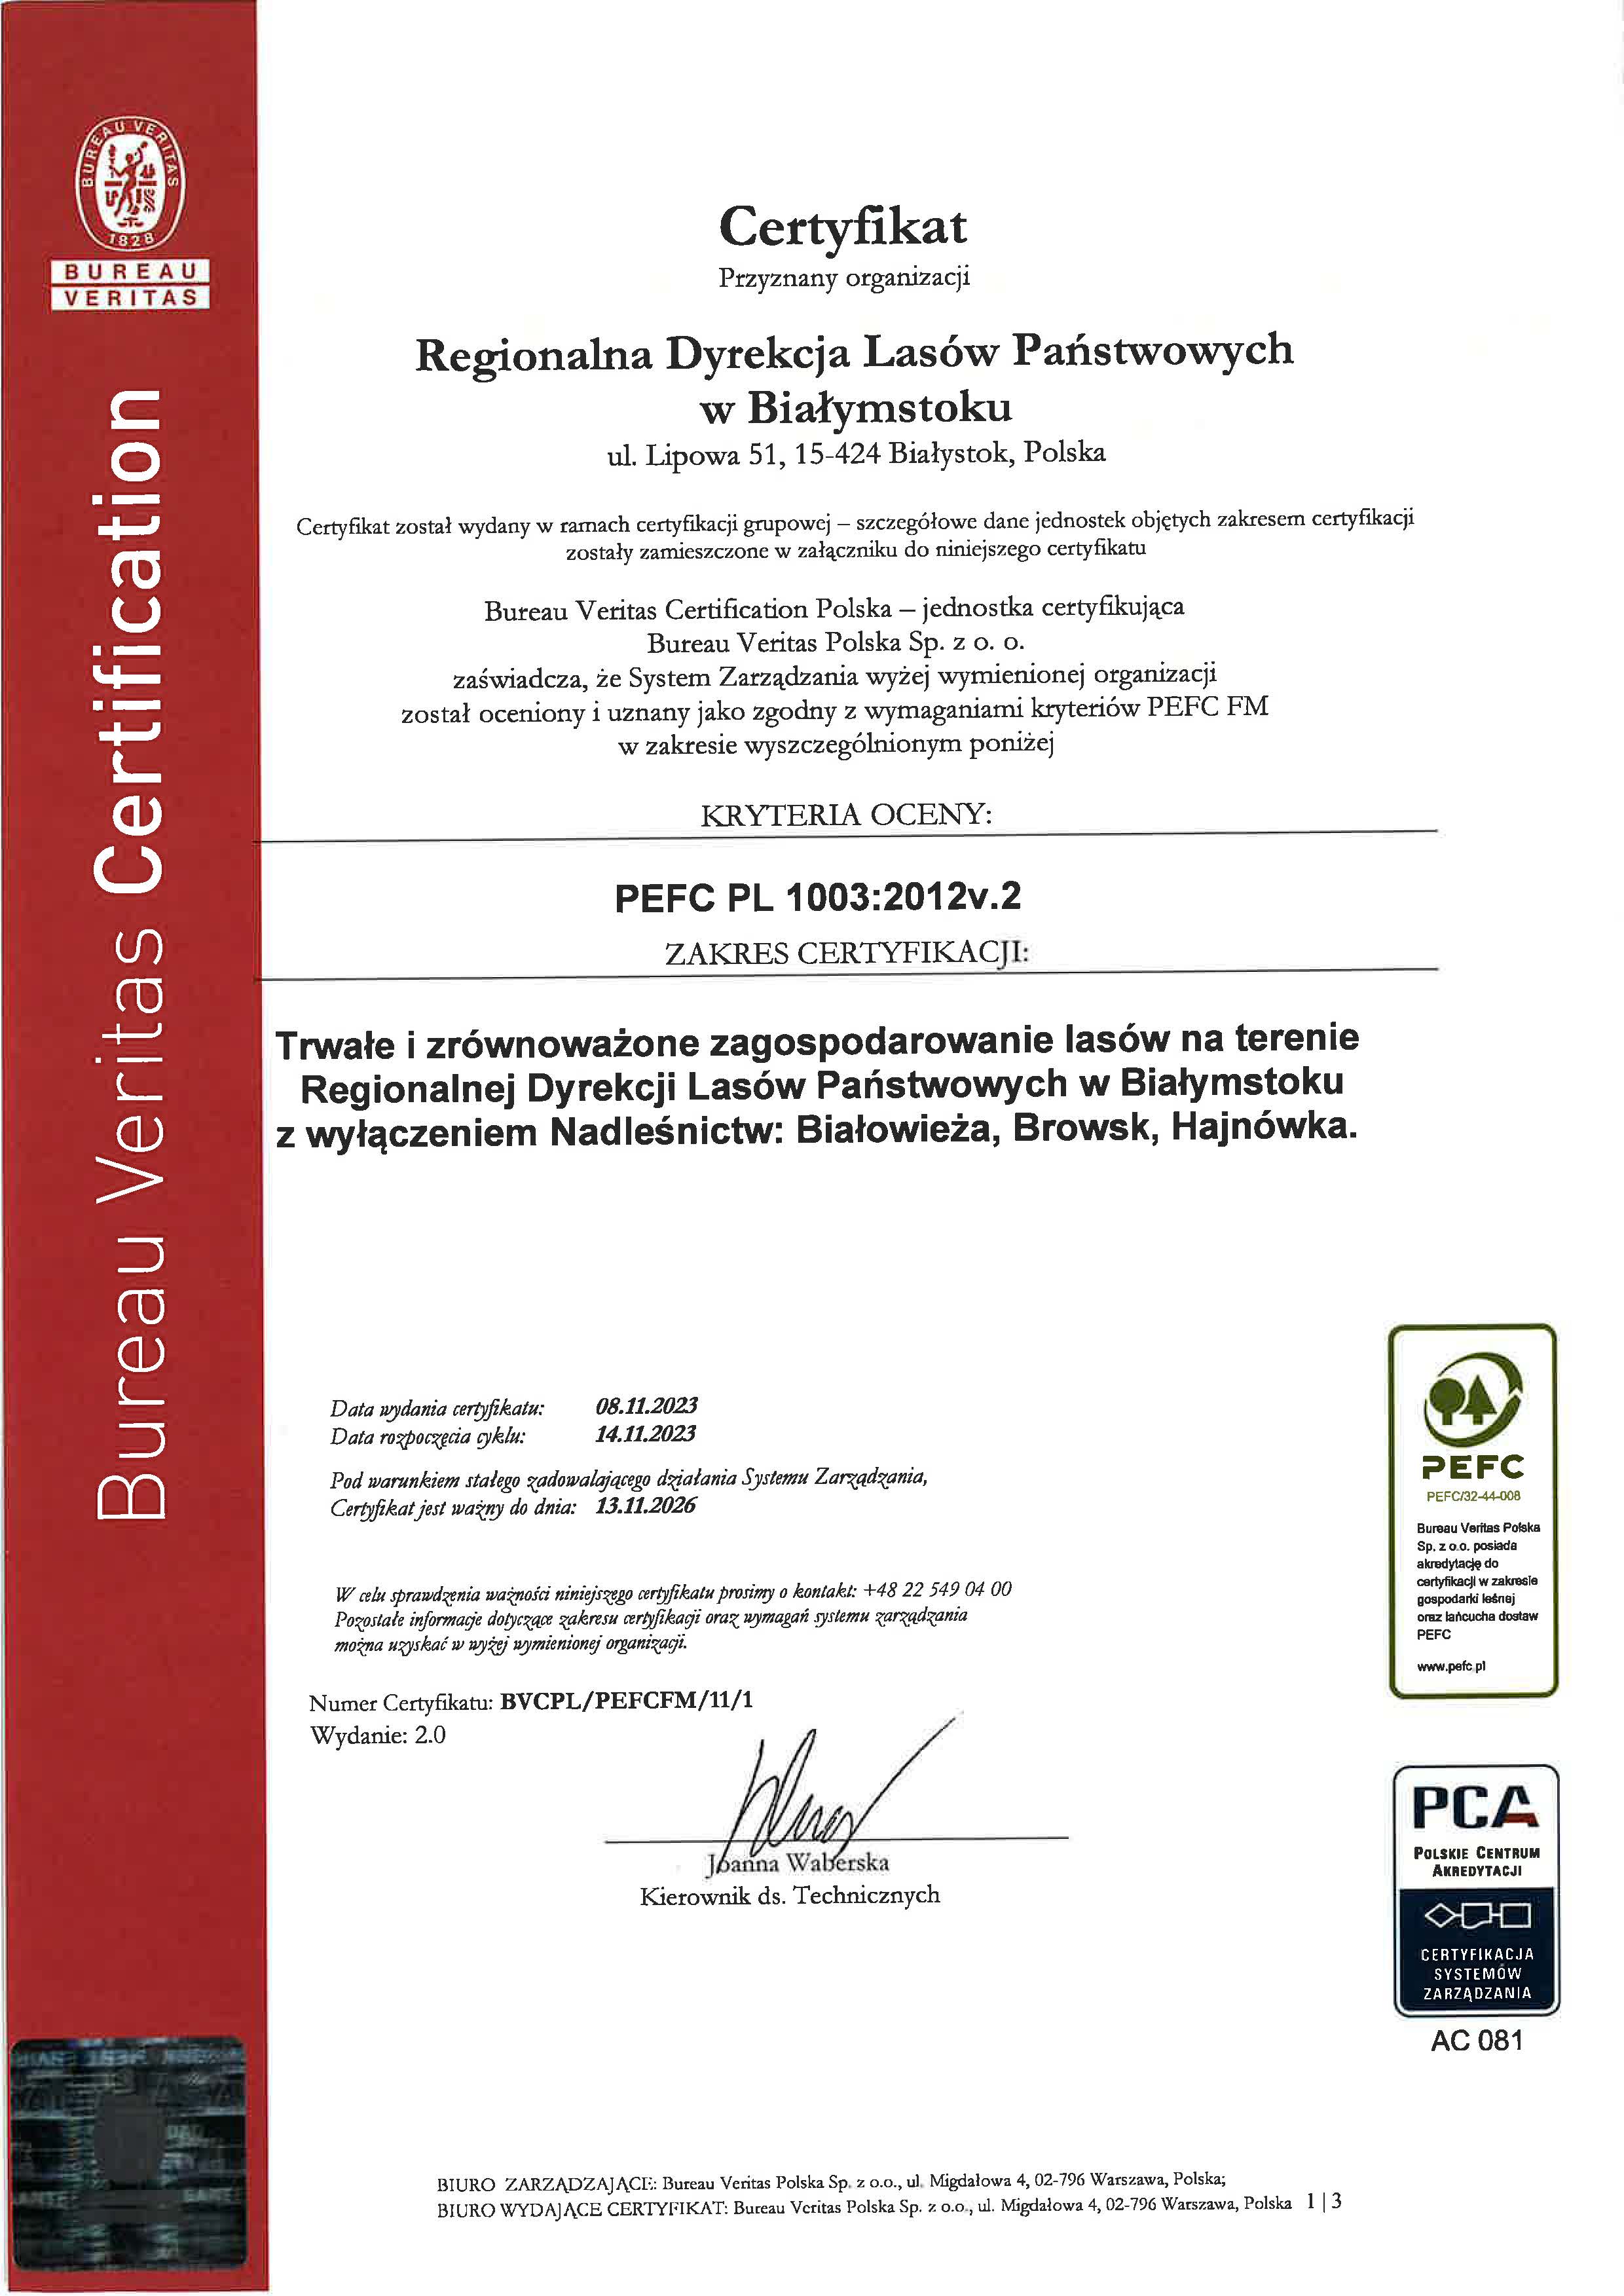 Certyfikat PEFC strona 1.